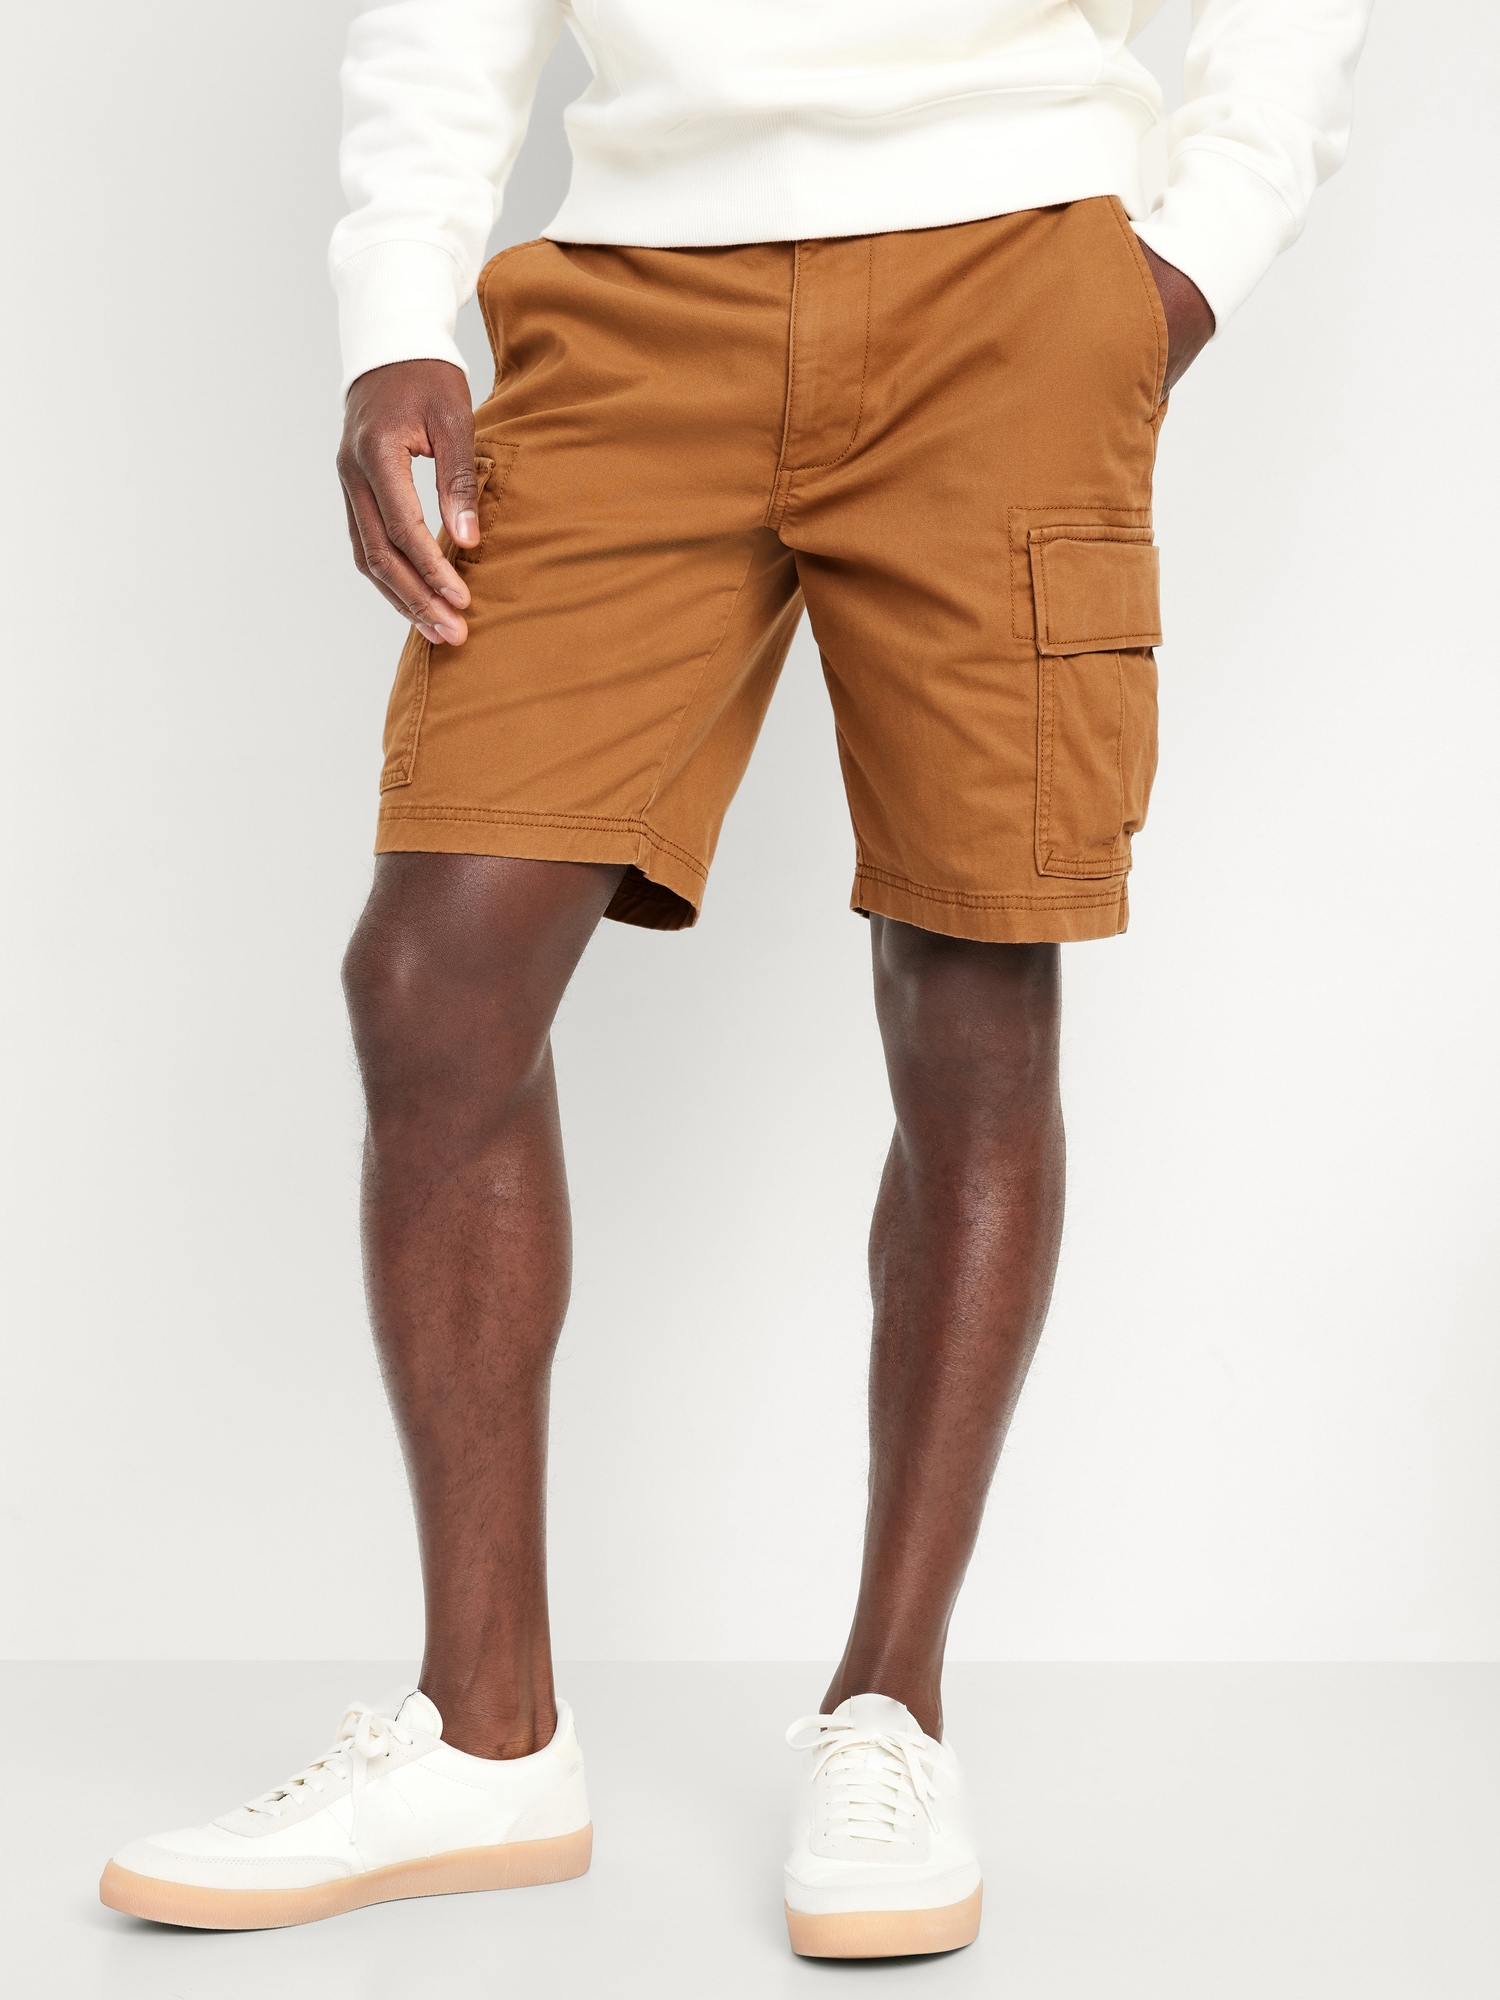 YUHAOTIN Fishing Shorts for Men Leisure Jogging Cargo Cotton Men's Summer Shorts  Shorts Vintage Sports Men's Pants Casual Shorts for Men Mens Shorts Cargo  Big and Tall Micro Shorts 